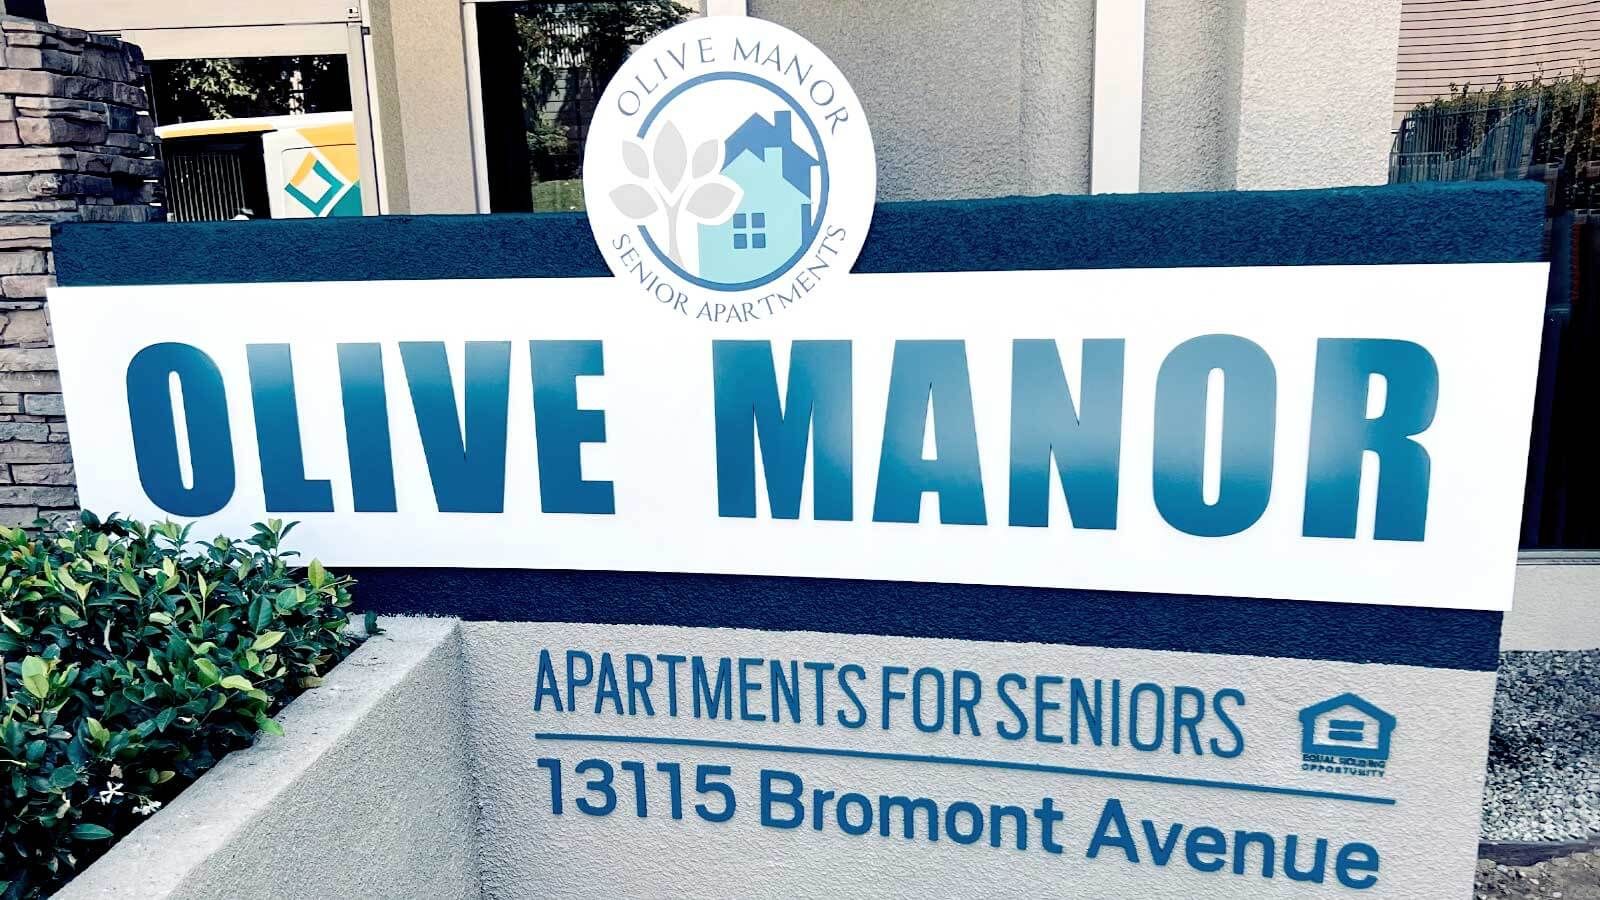 Olive Manor Senior Apartments custom outdoor sign